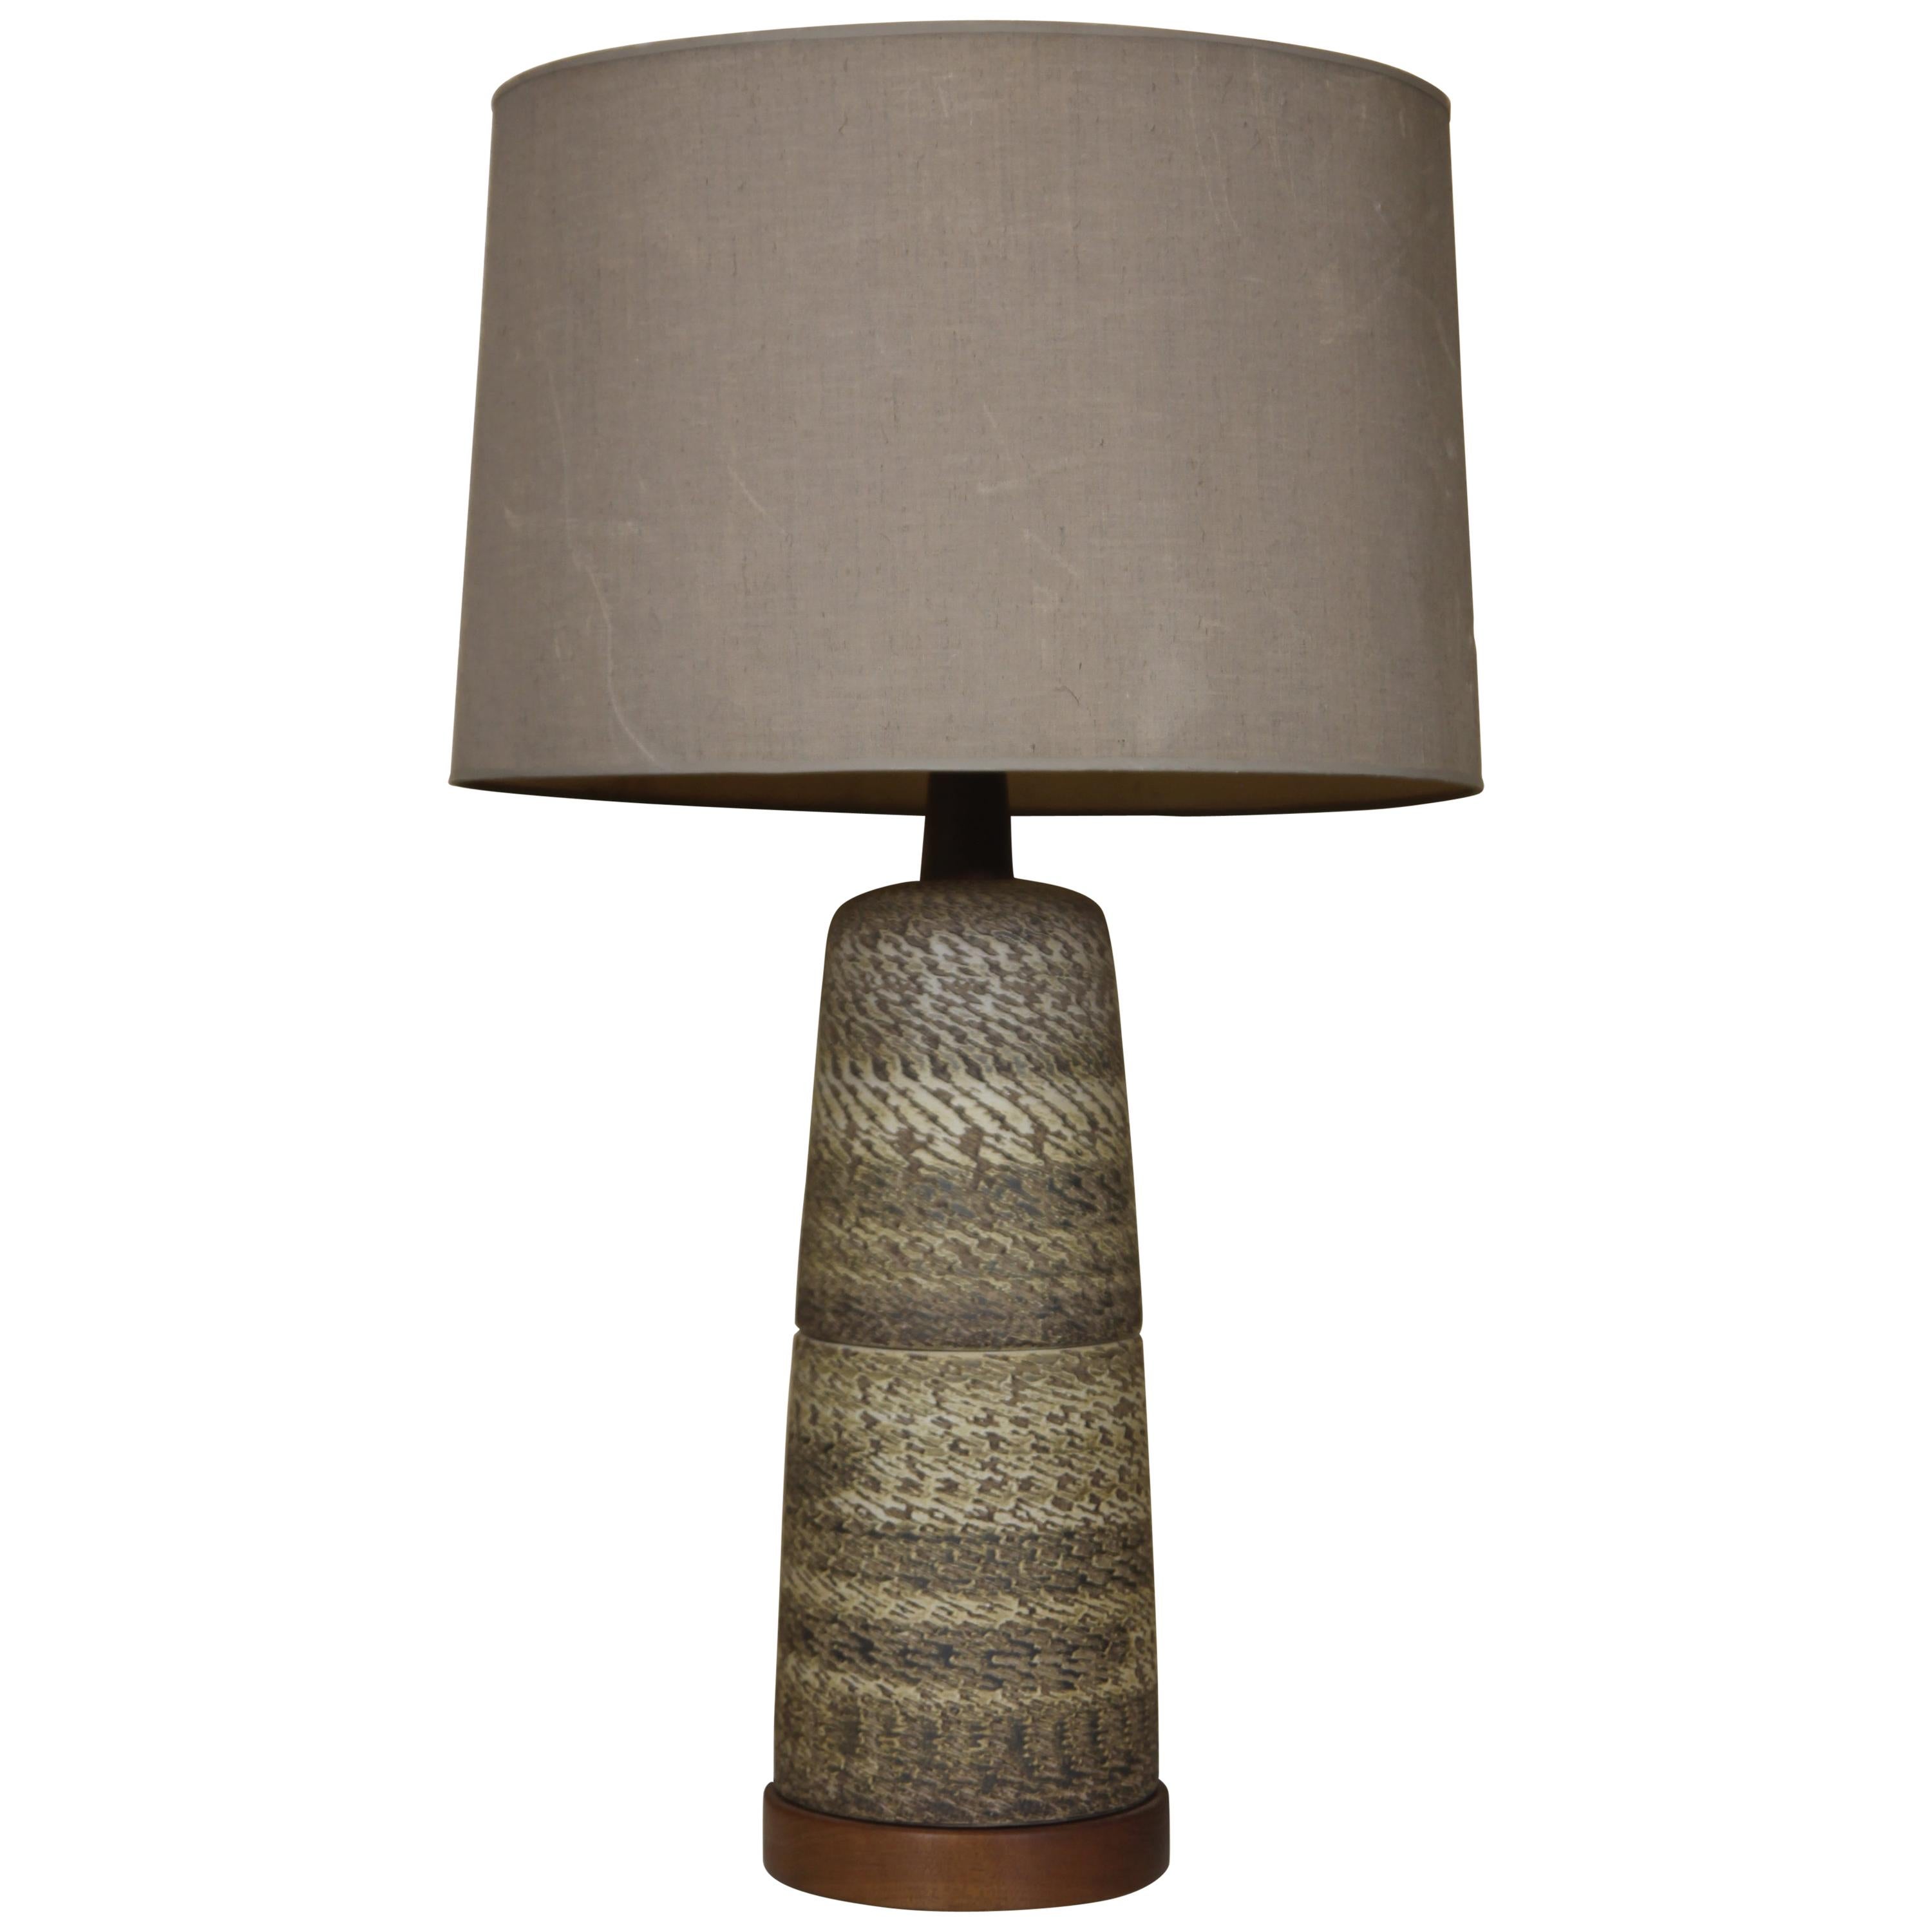 Ceramic and Walnut Table Lamp Designed by Gordon & Jane Martz